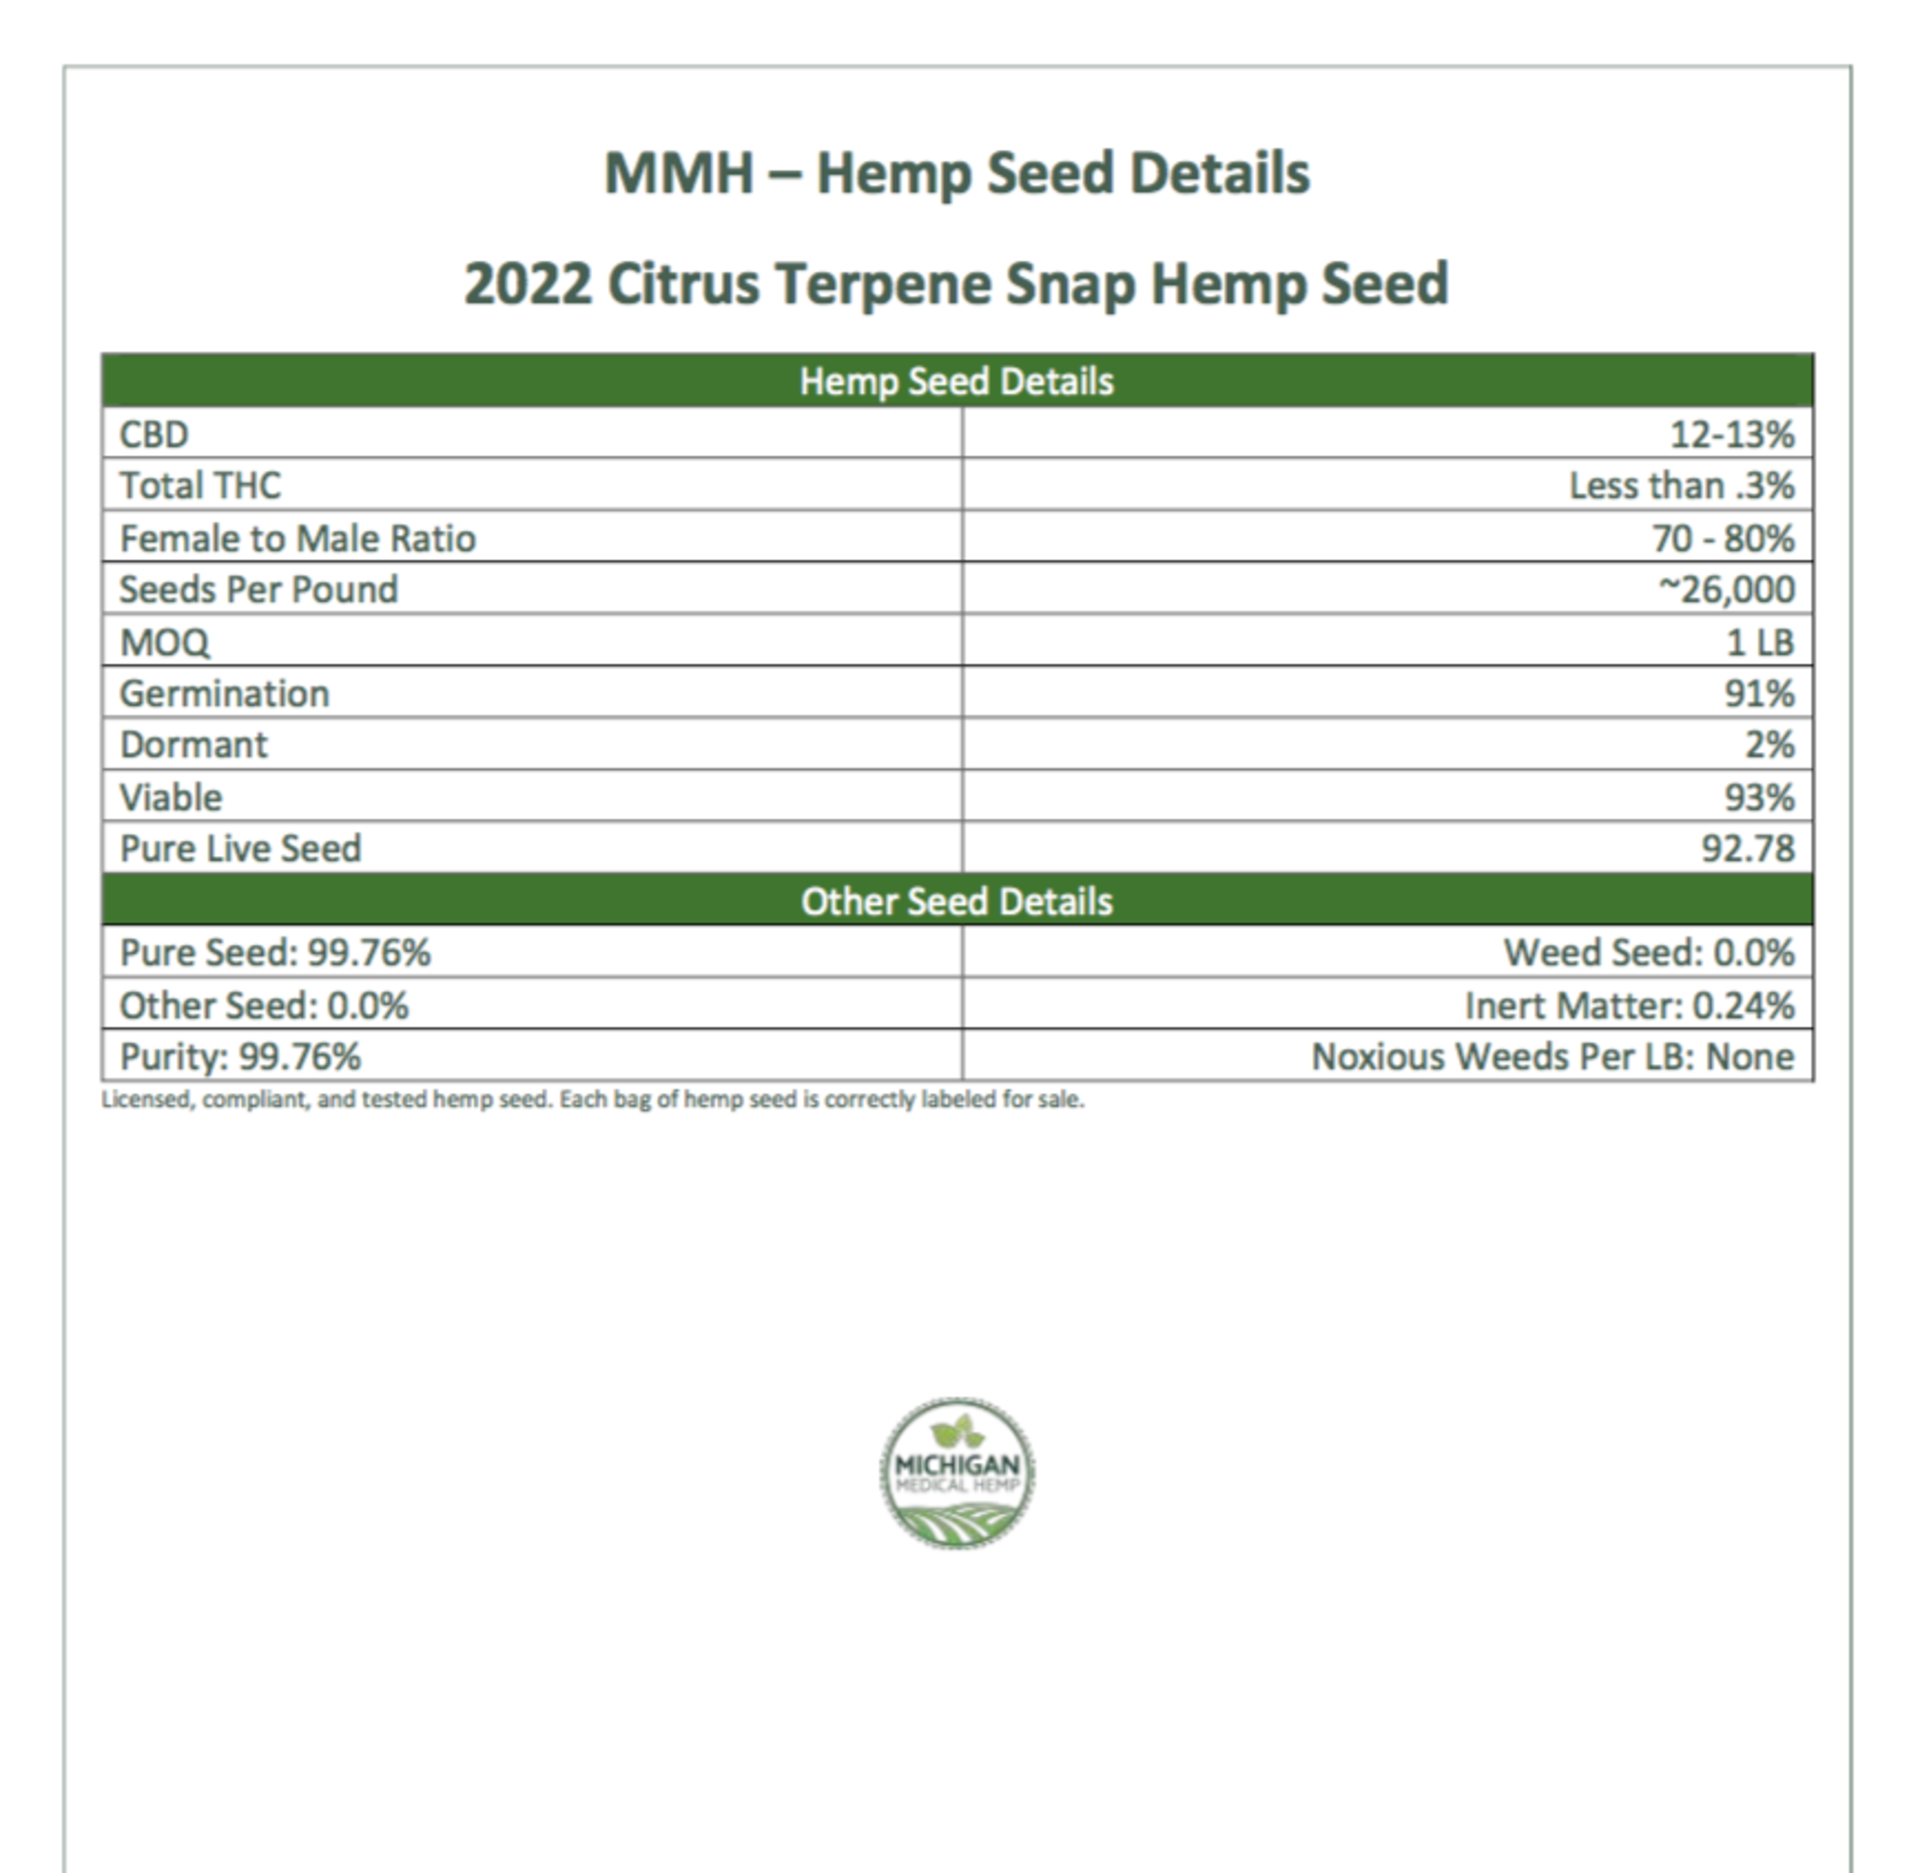 QTY 1 LBS (~26,000 Seeds) MMH Citrus Terpene Snap Hemp Seeds - Image 2 of 9